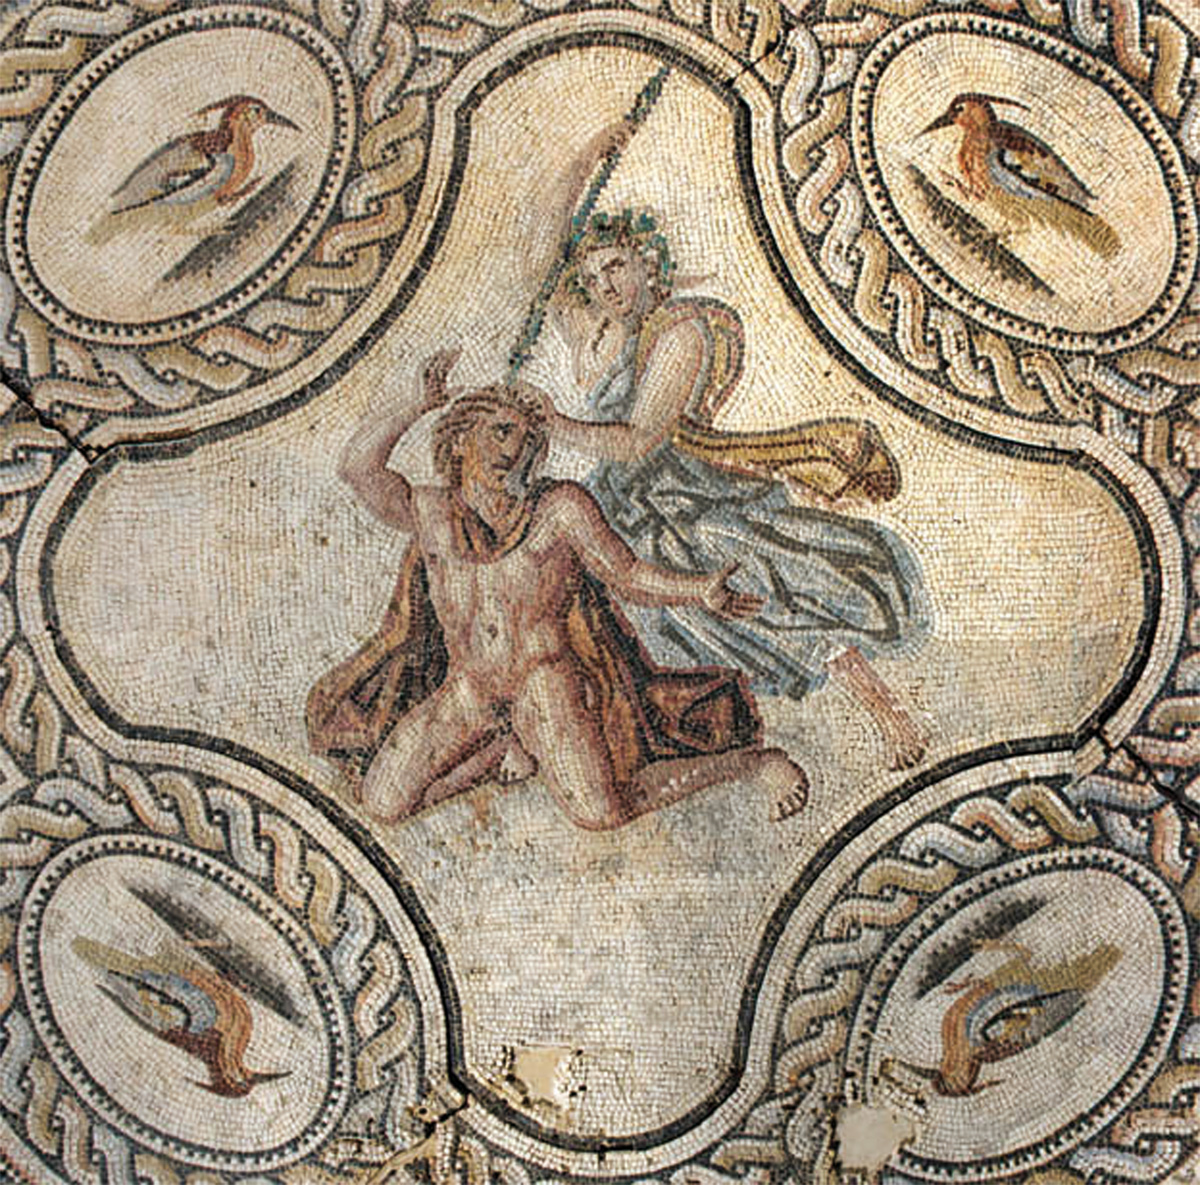 Museum of Roman Culture Pentheus mosaic